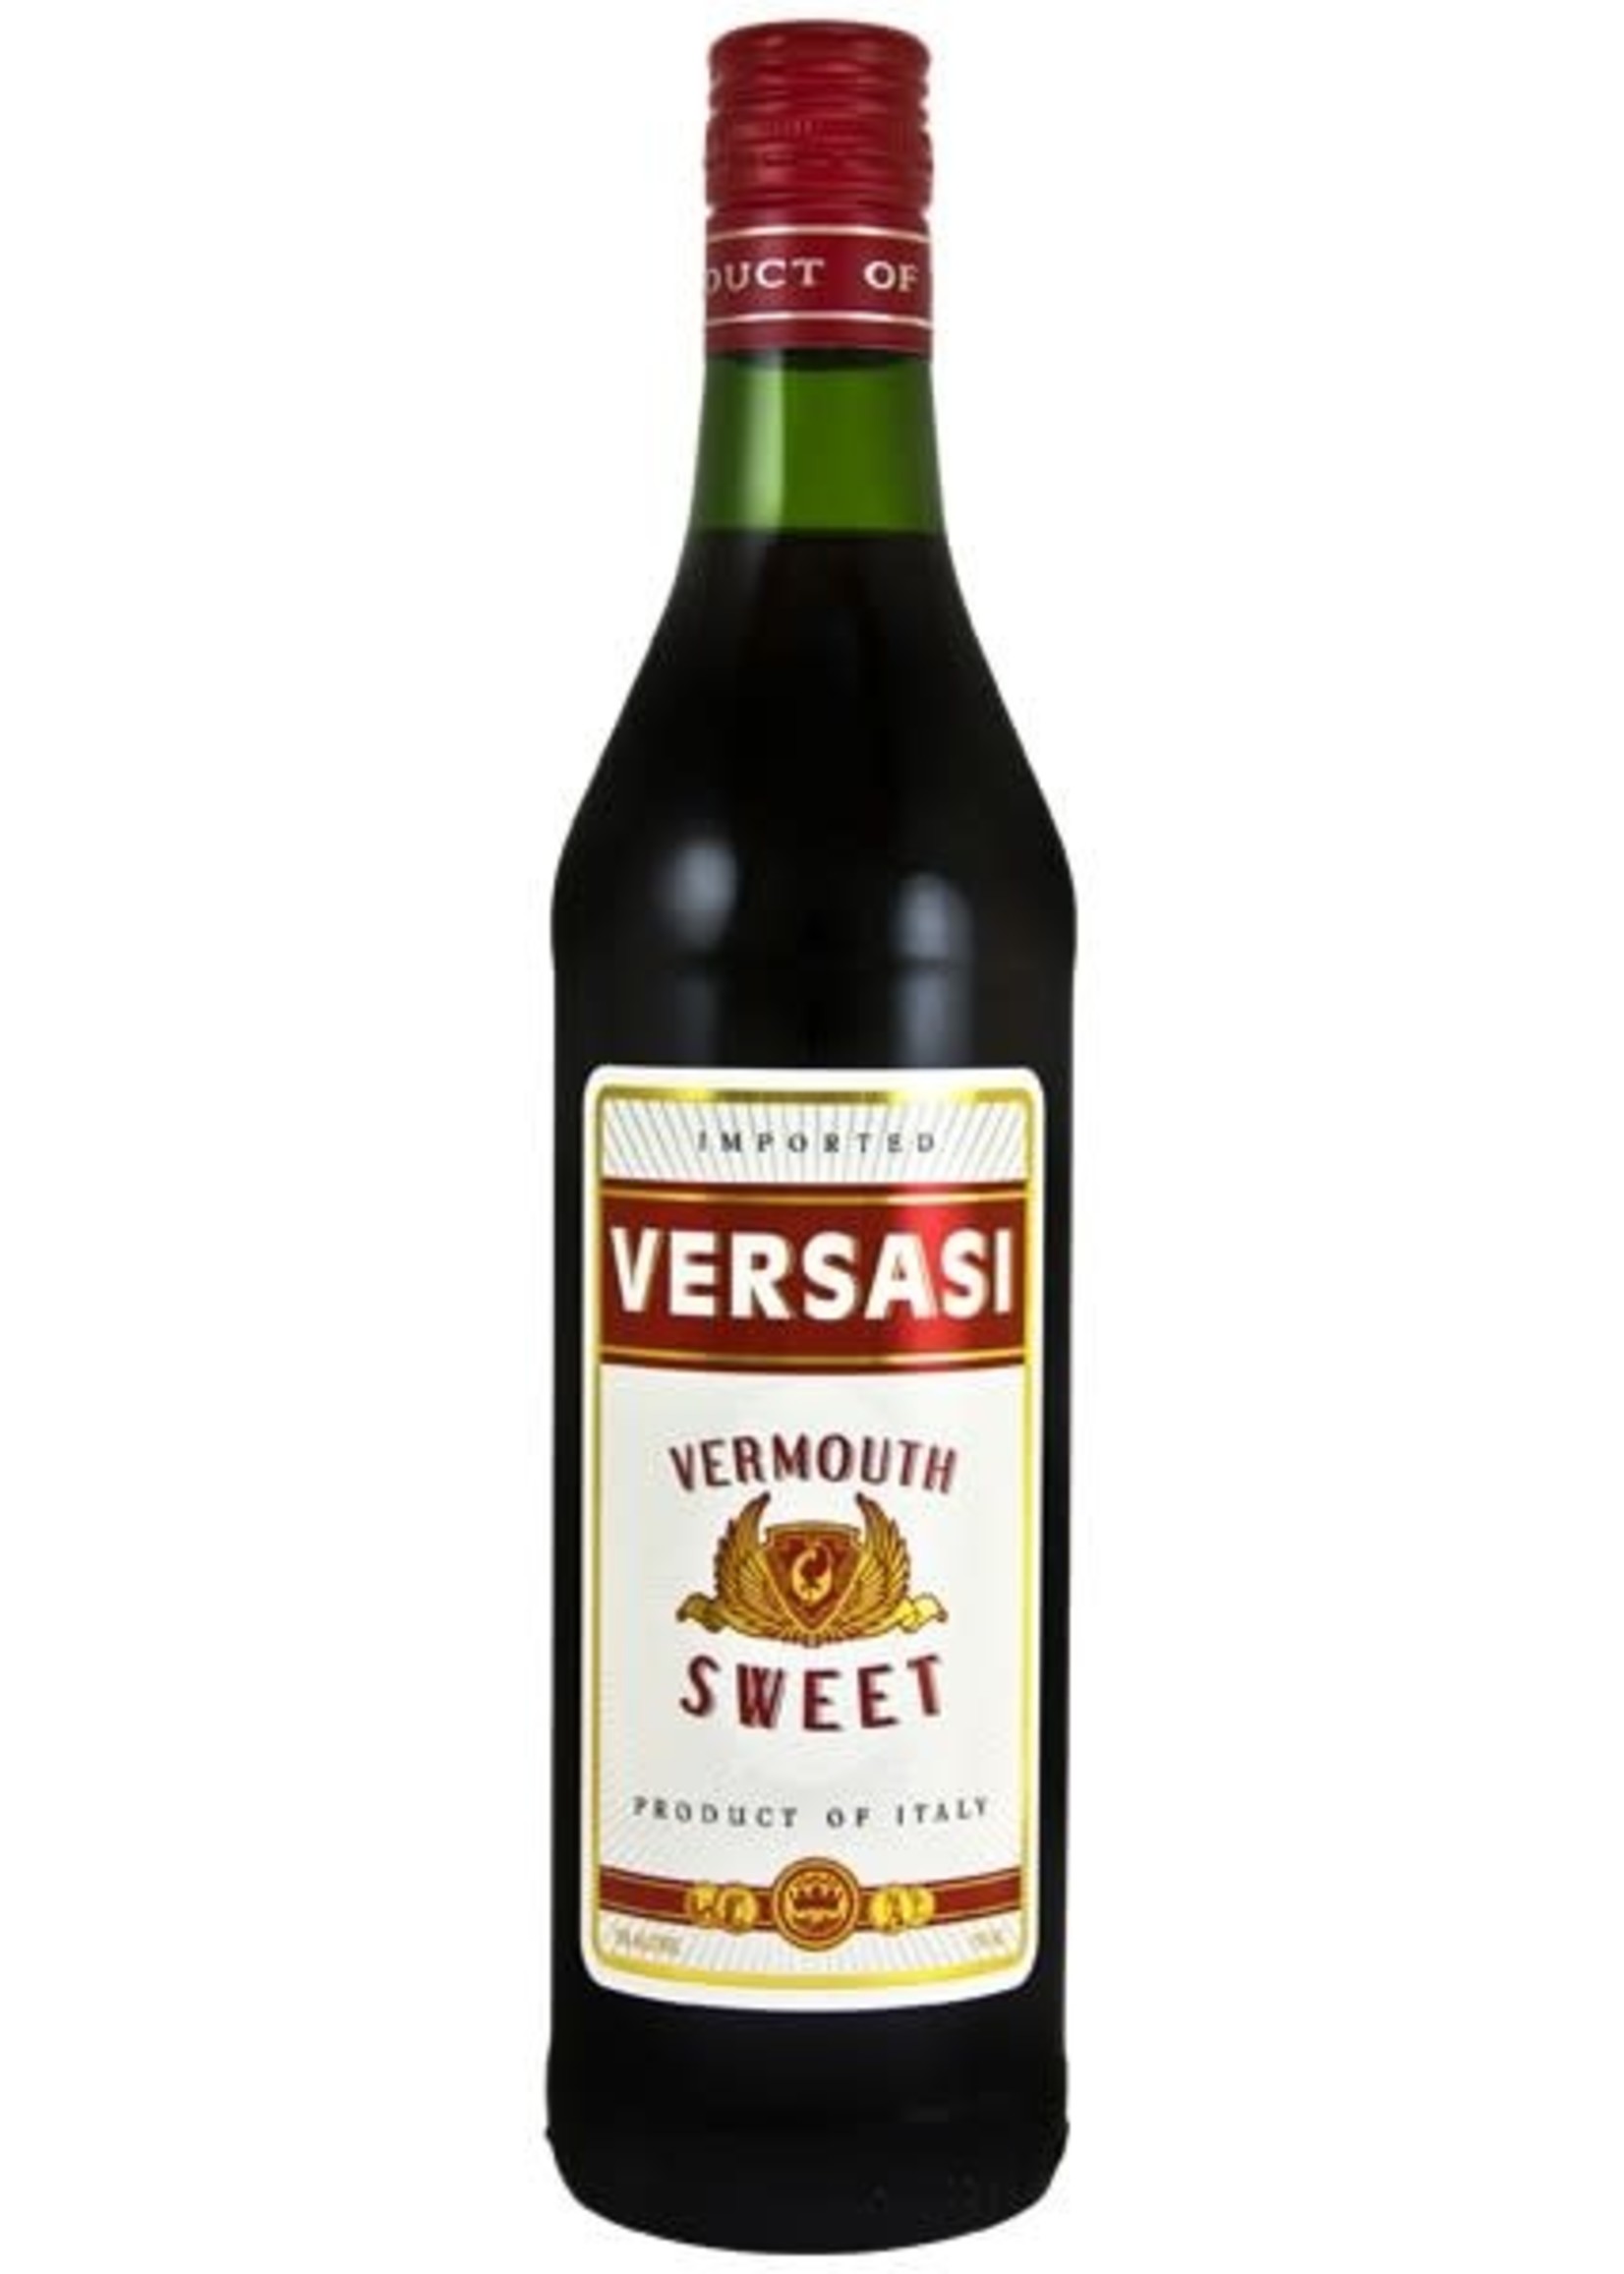 Versasi Vermouth Sweet 30Proof 750ml